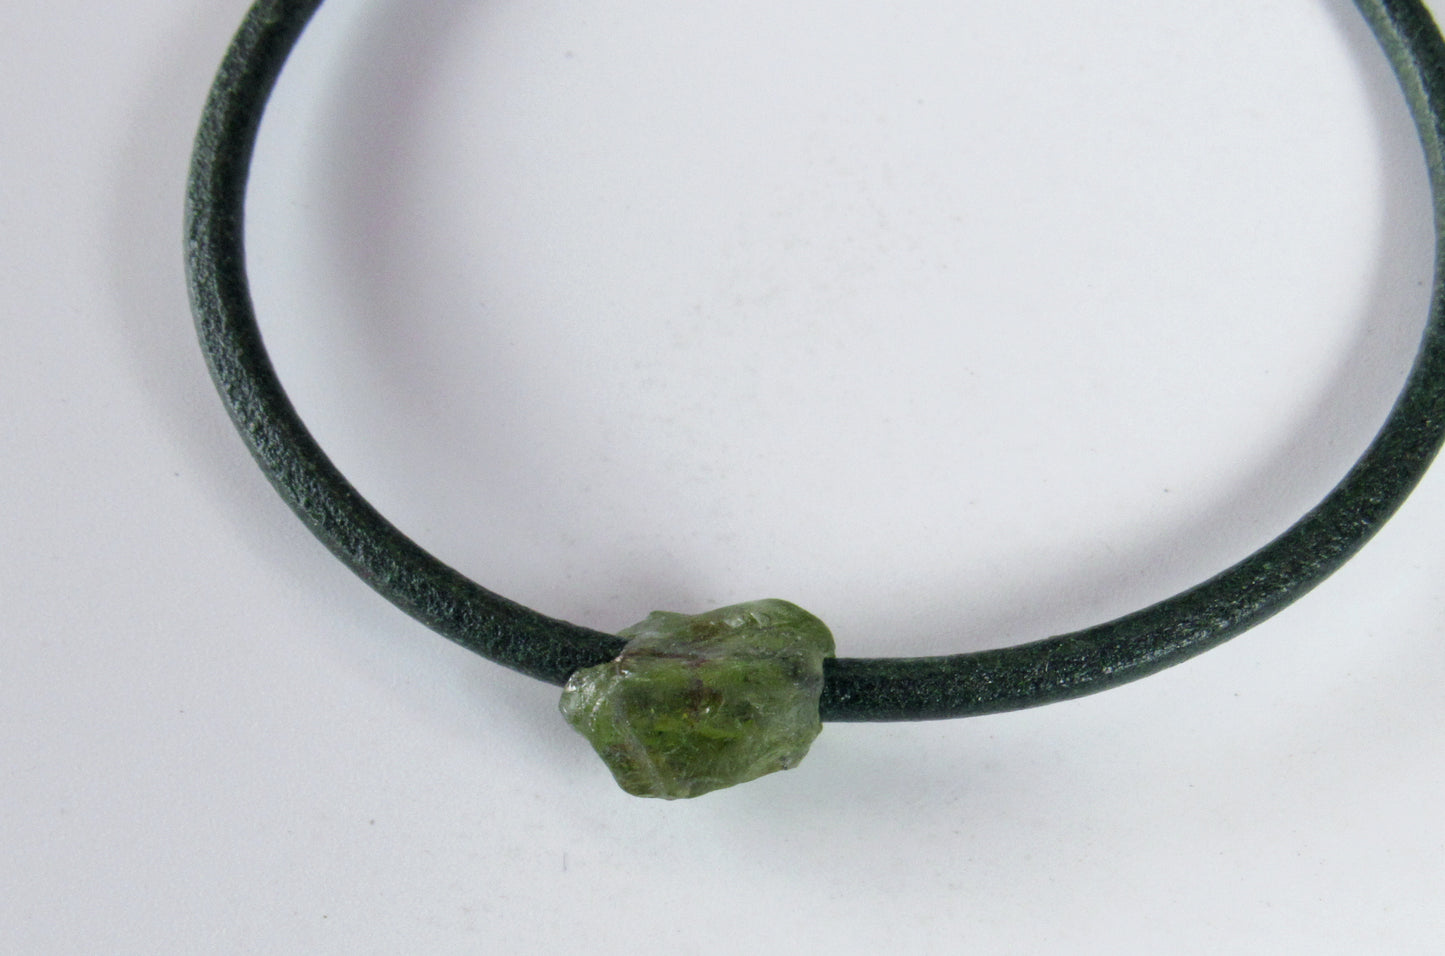 Green Leather and Peridot Gemstone clasp bracelets